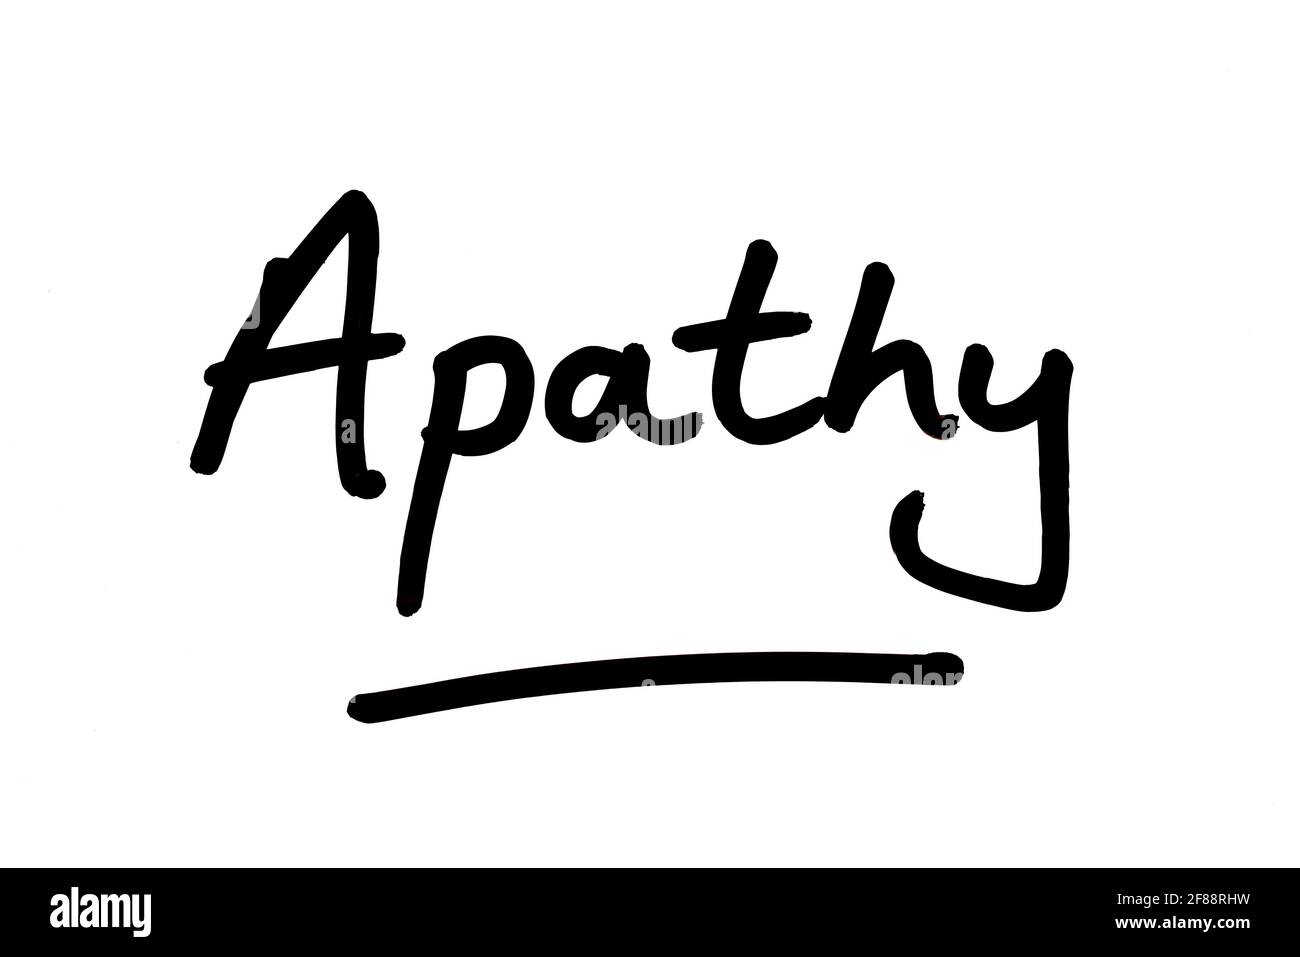 Apathy, handwritten on a white background. Stock Photo